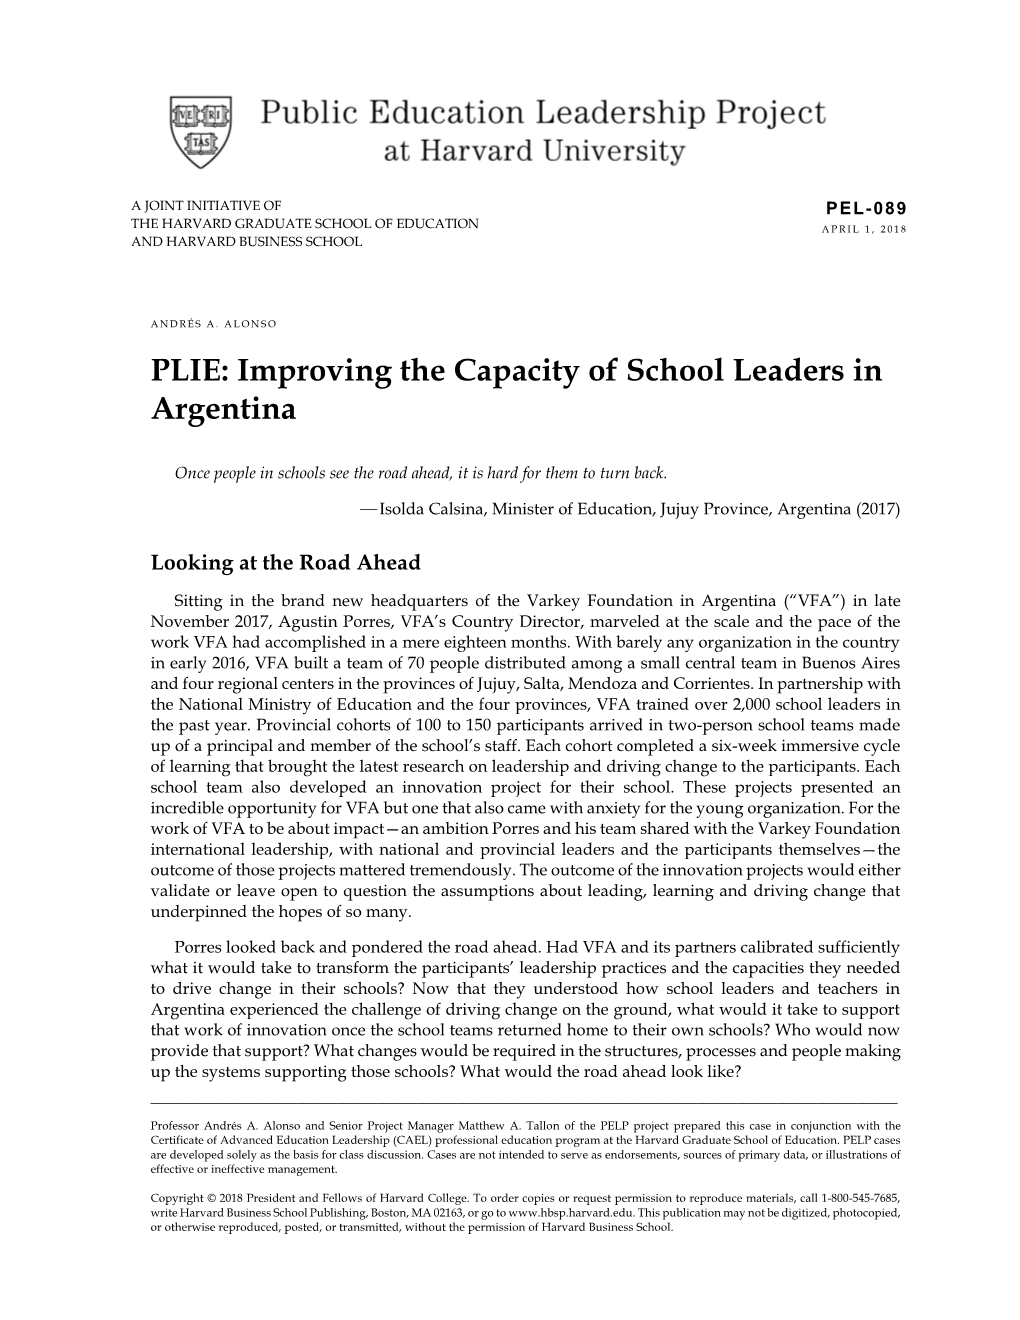 PLIE: Improving the Capacity of School Leaders in Argentina